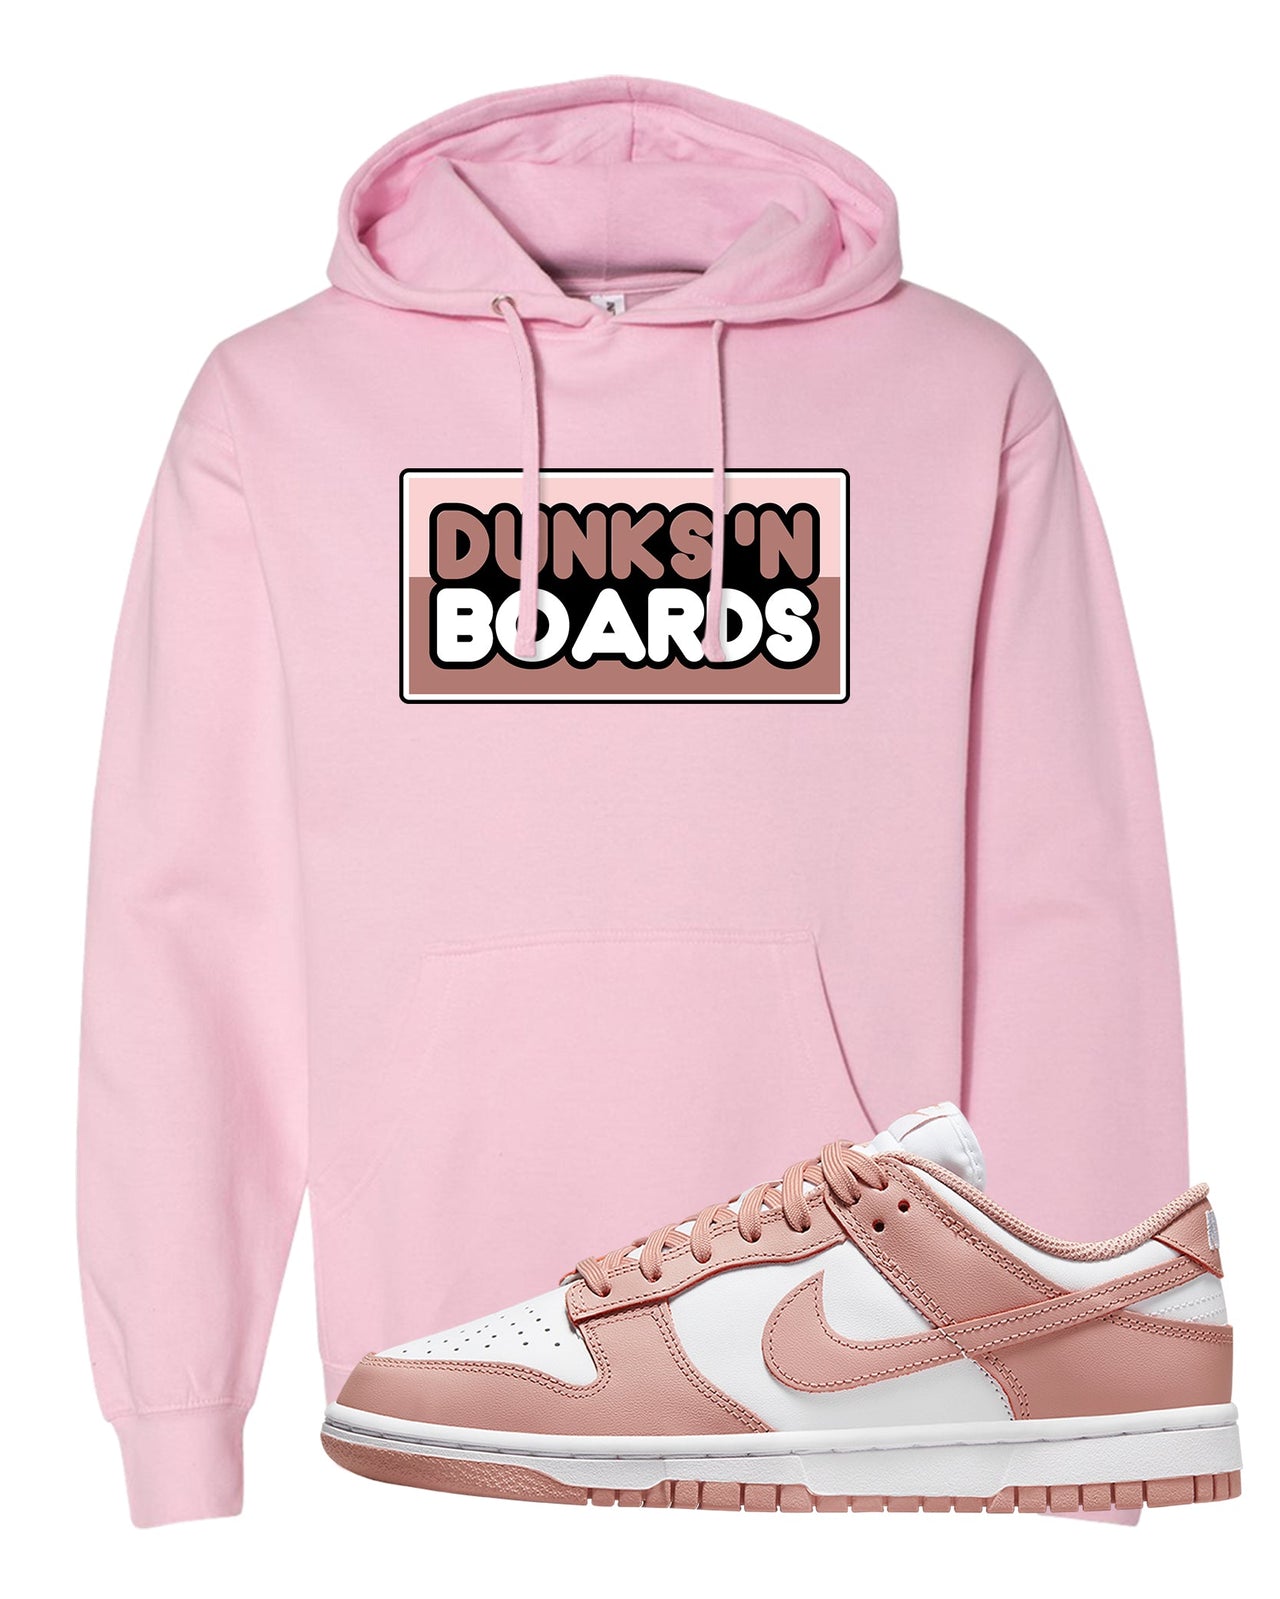 Rose Whisper Low Dunks Hoodie | Dunks N Boards, Light Pink